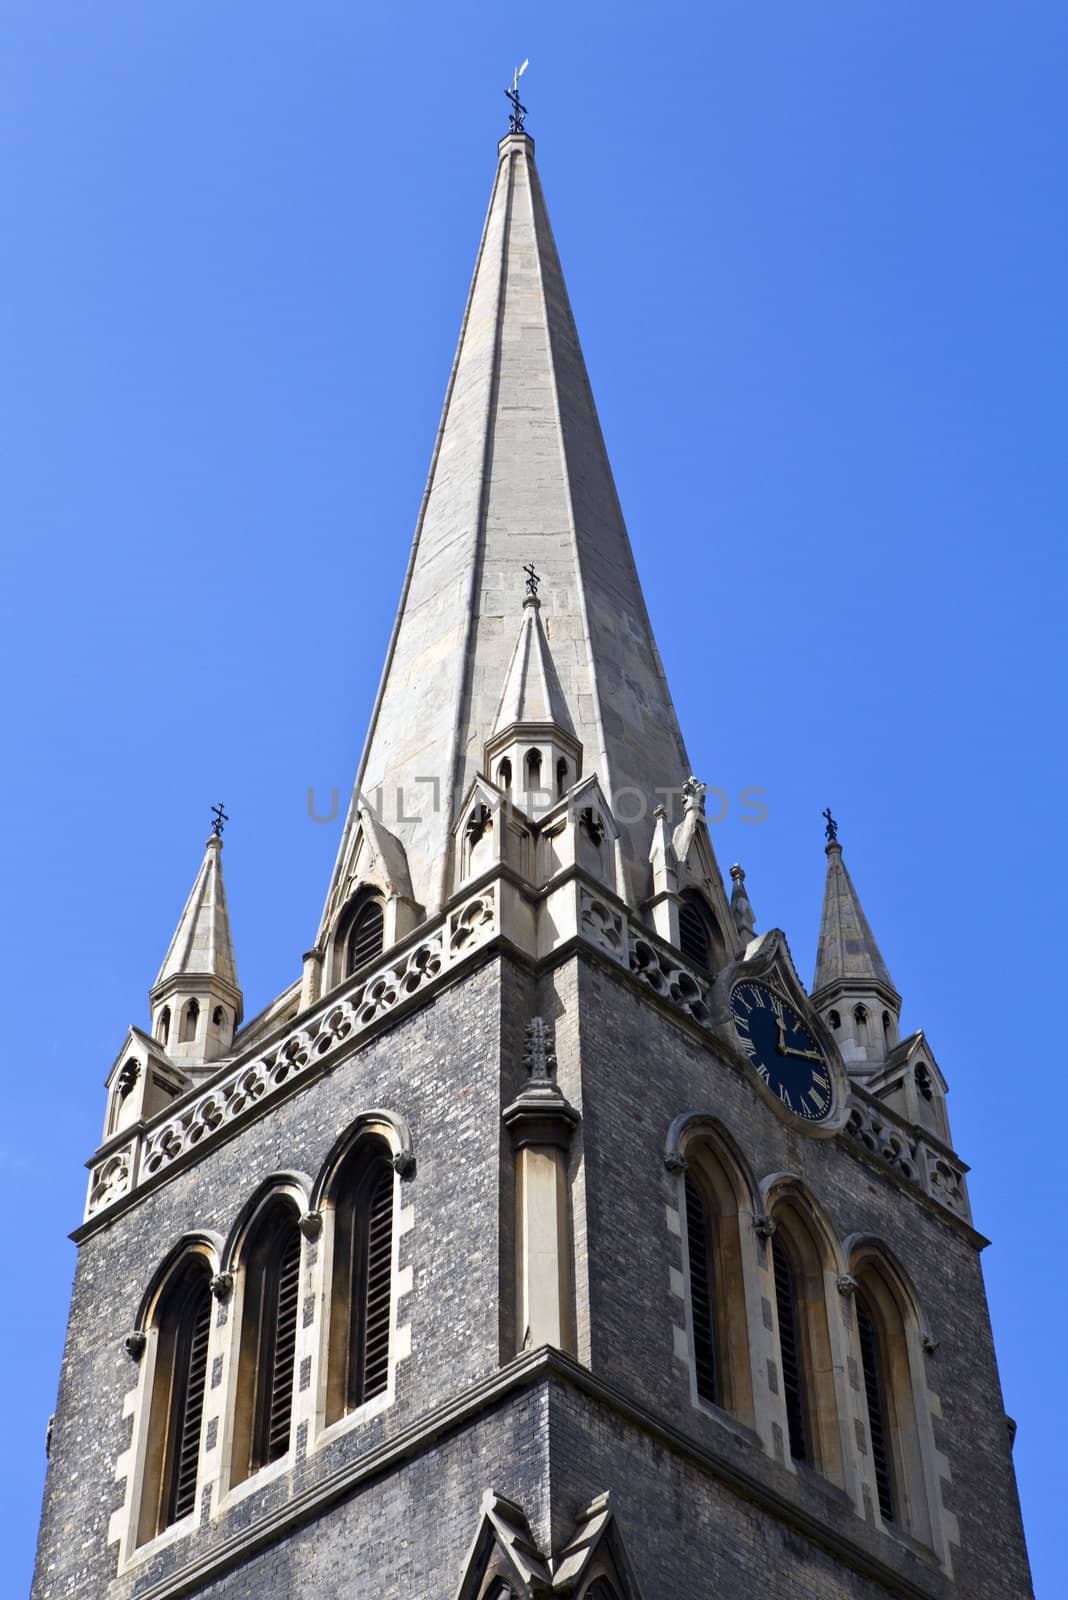 St. James The Less Church in Paddington by chrisdorney